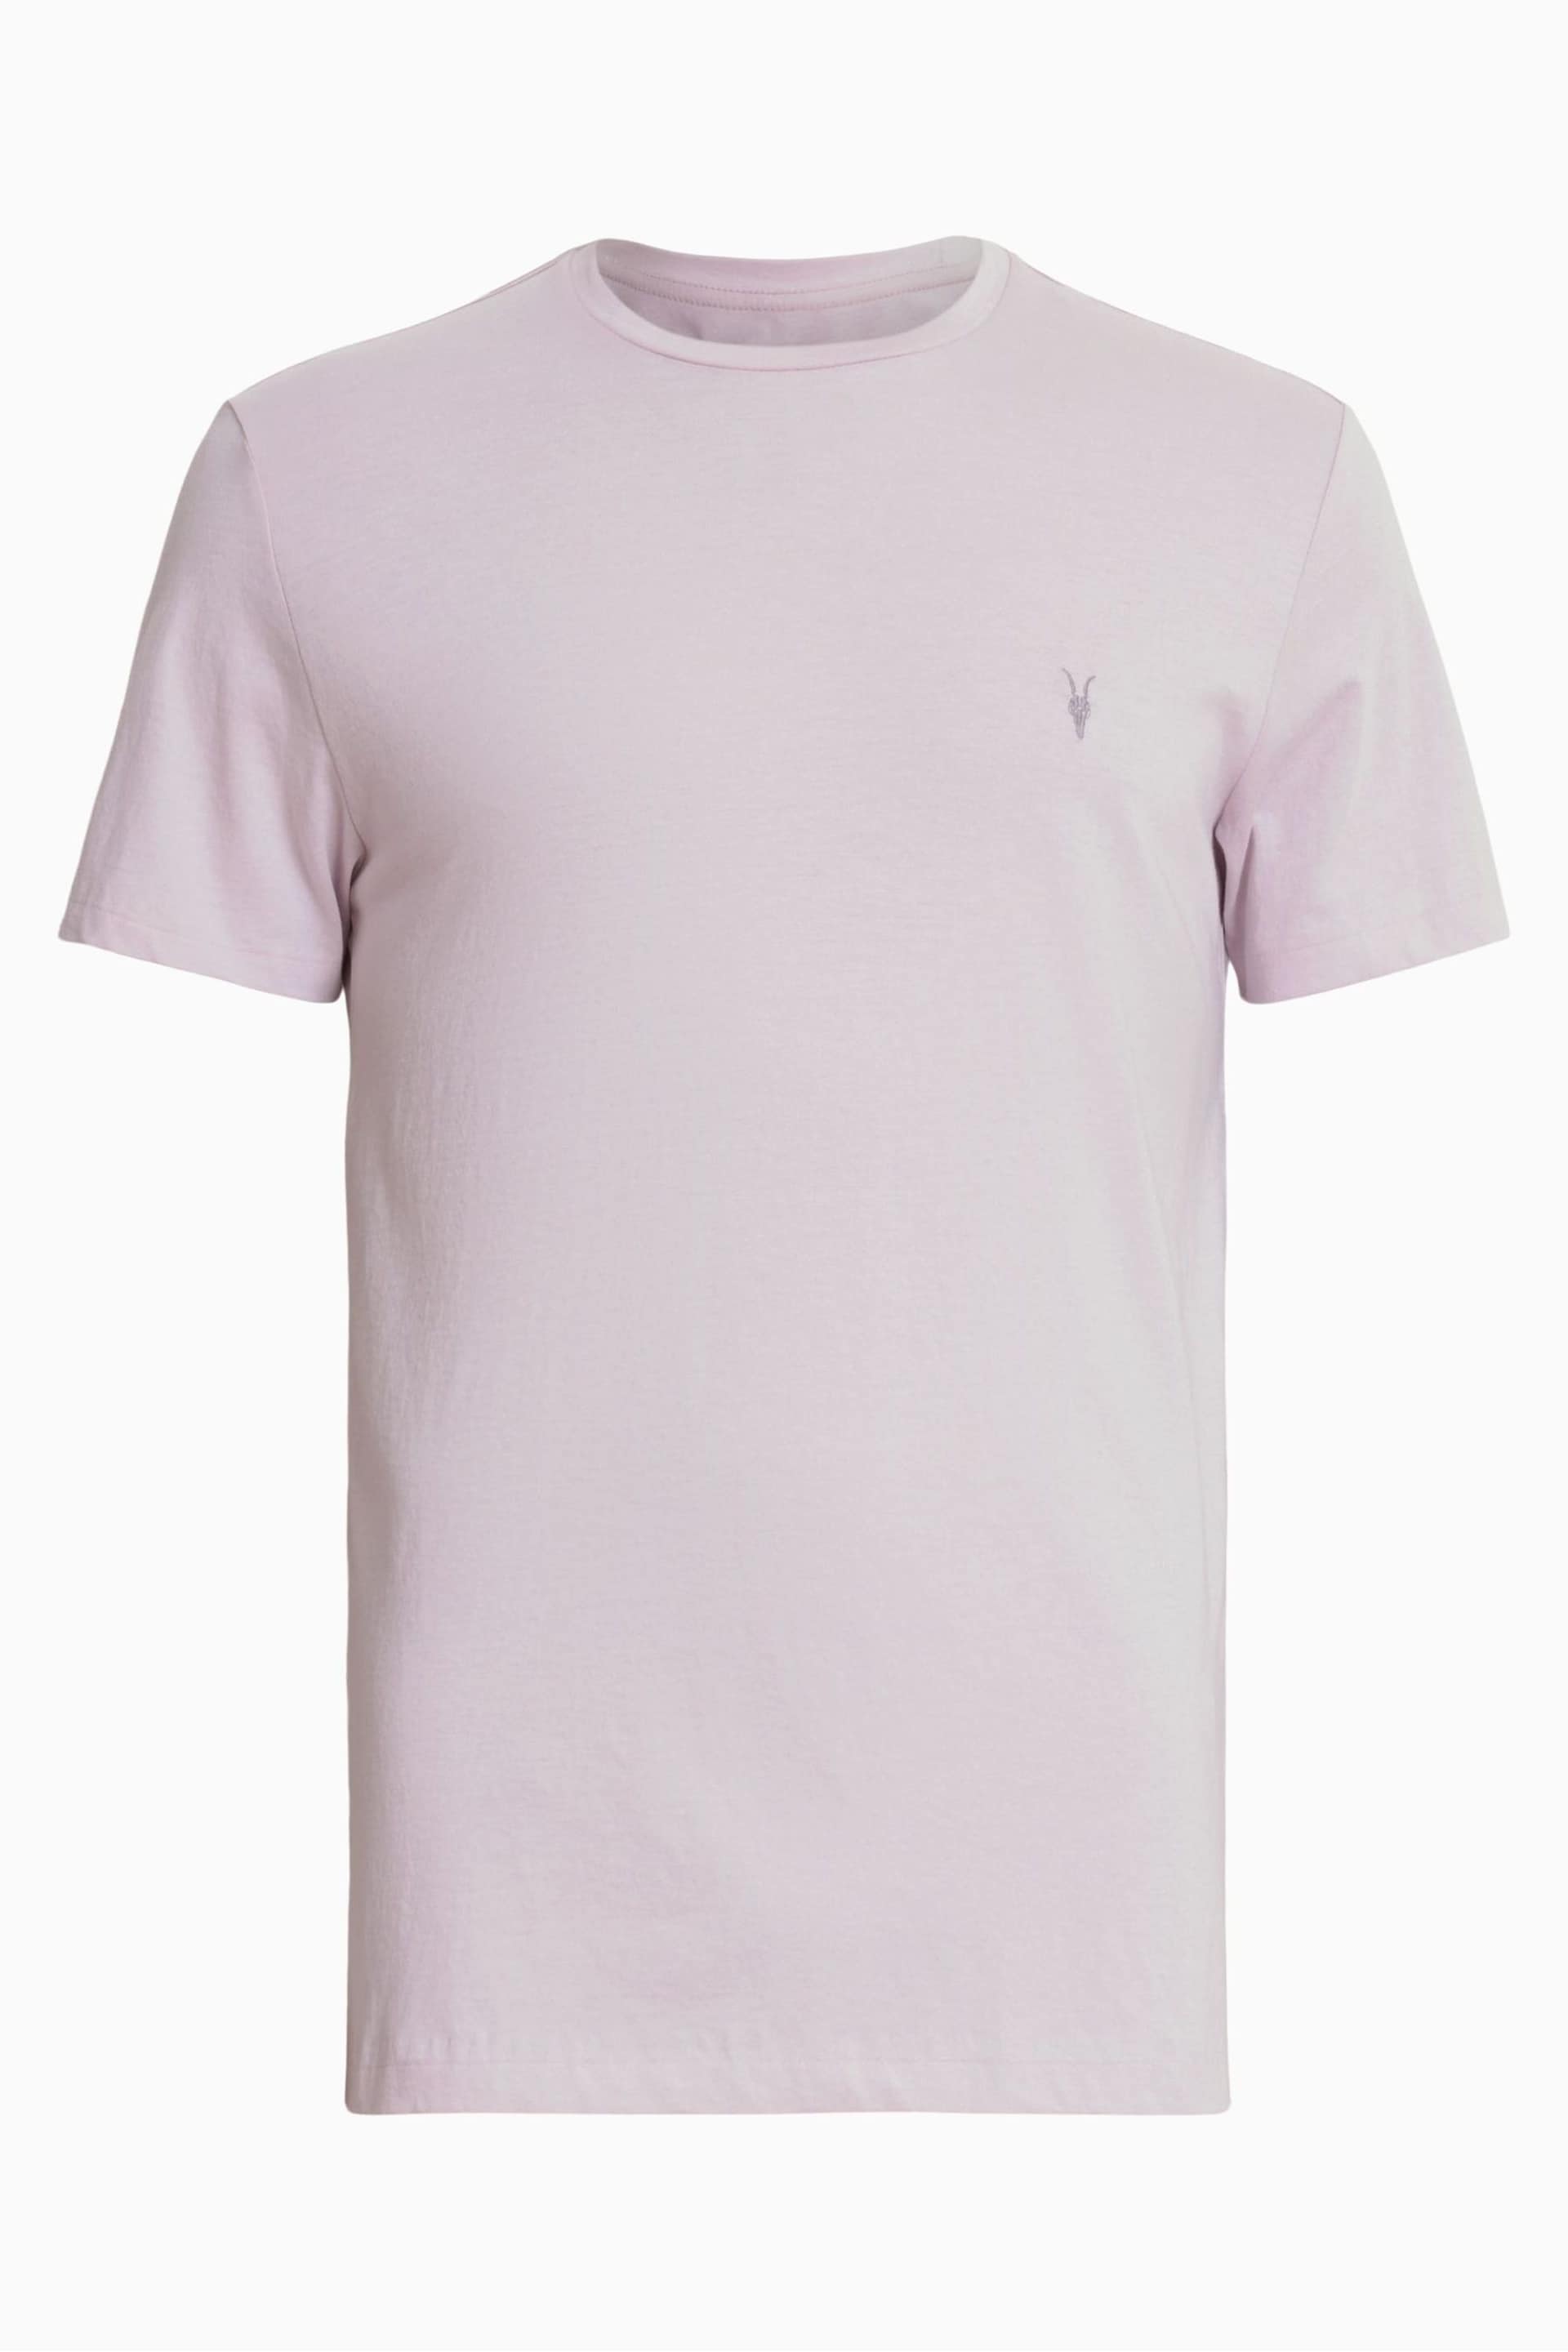 AllSaints Purple Tonic Short Sleeve Crew Neck T-Shirt - Image 6 of 6